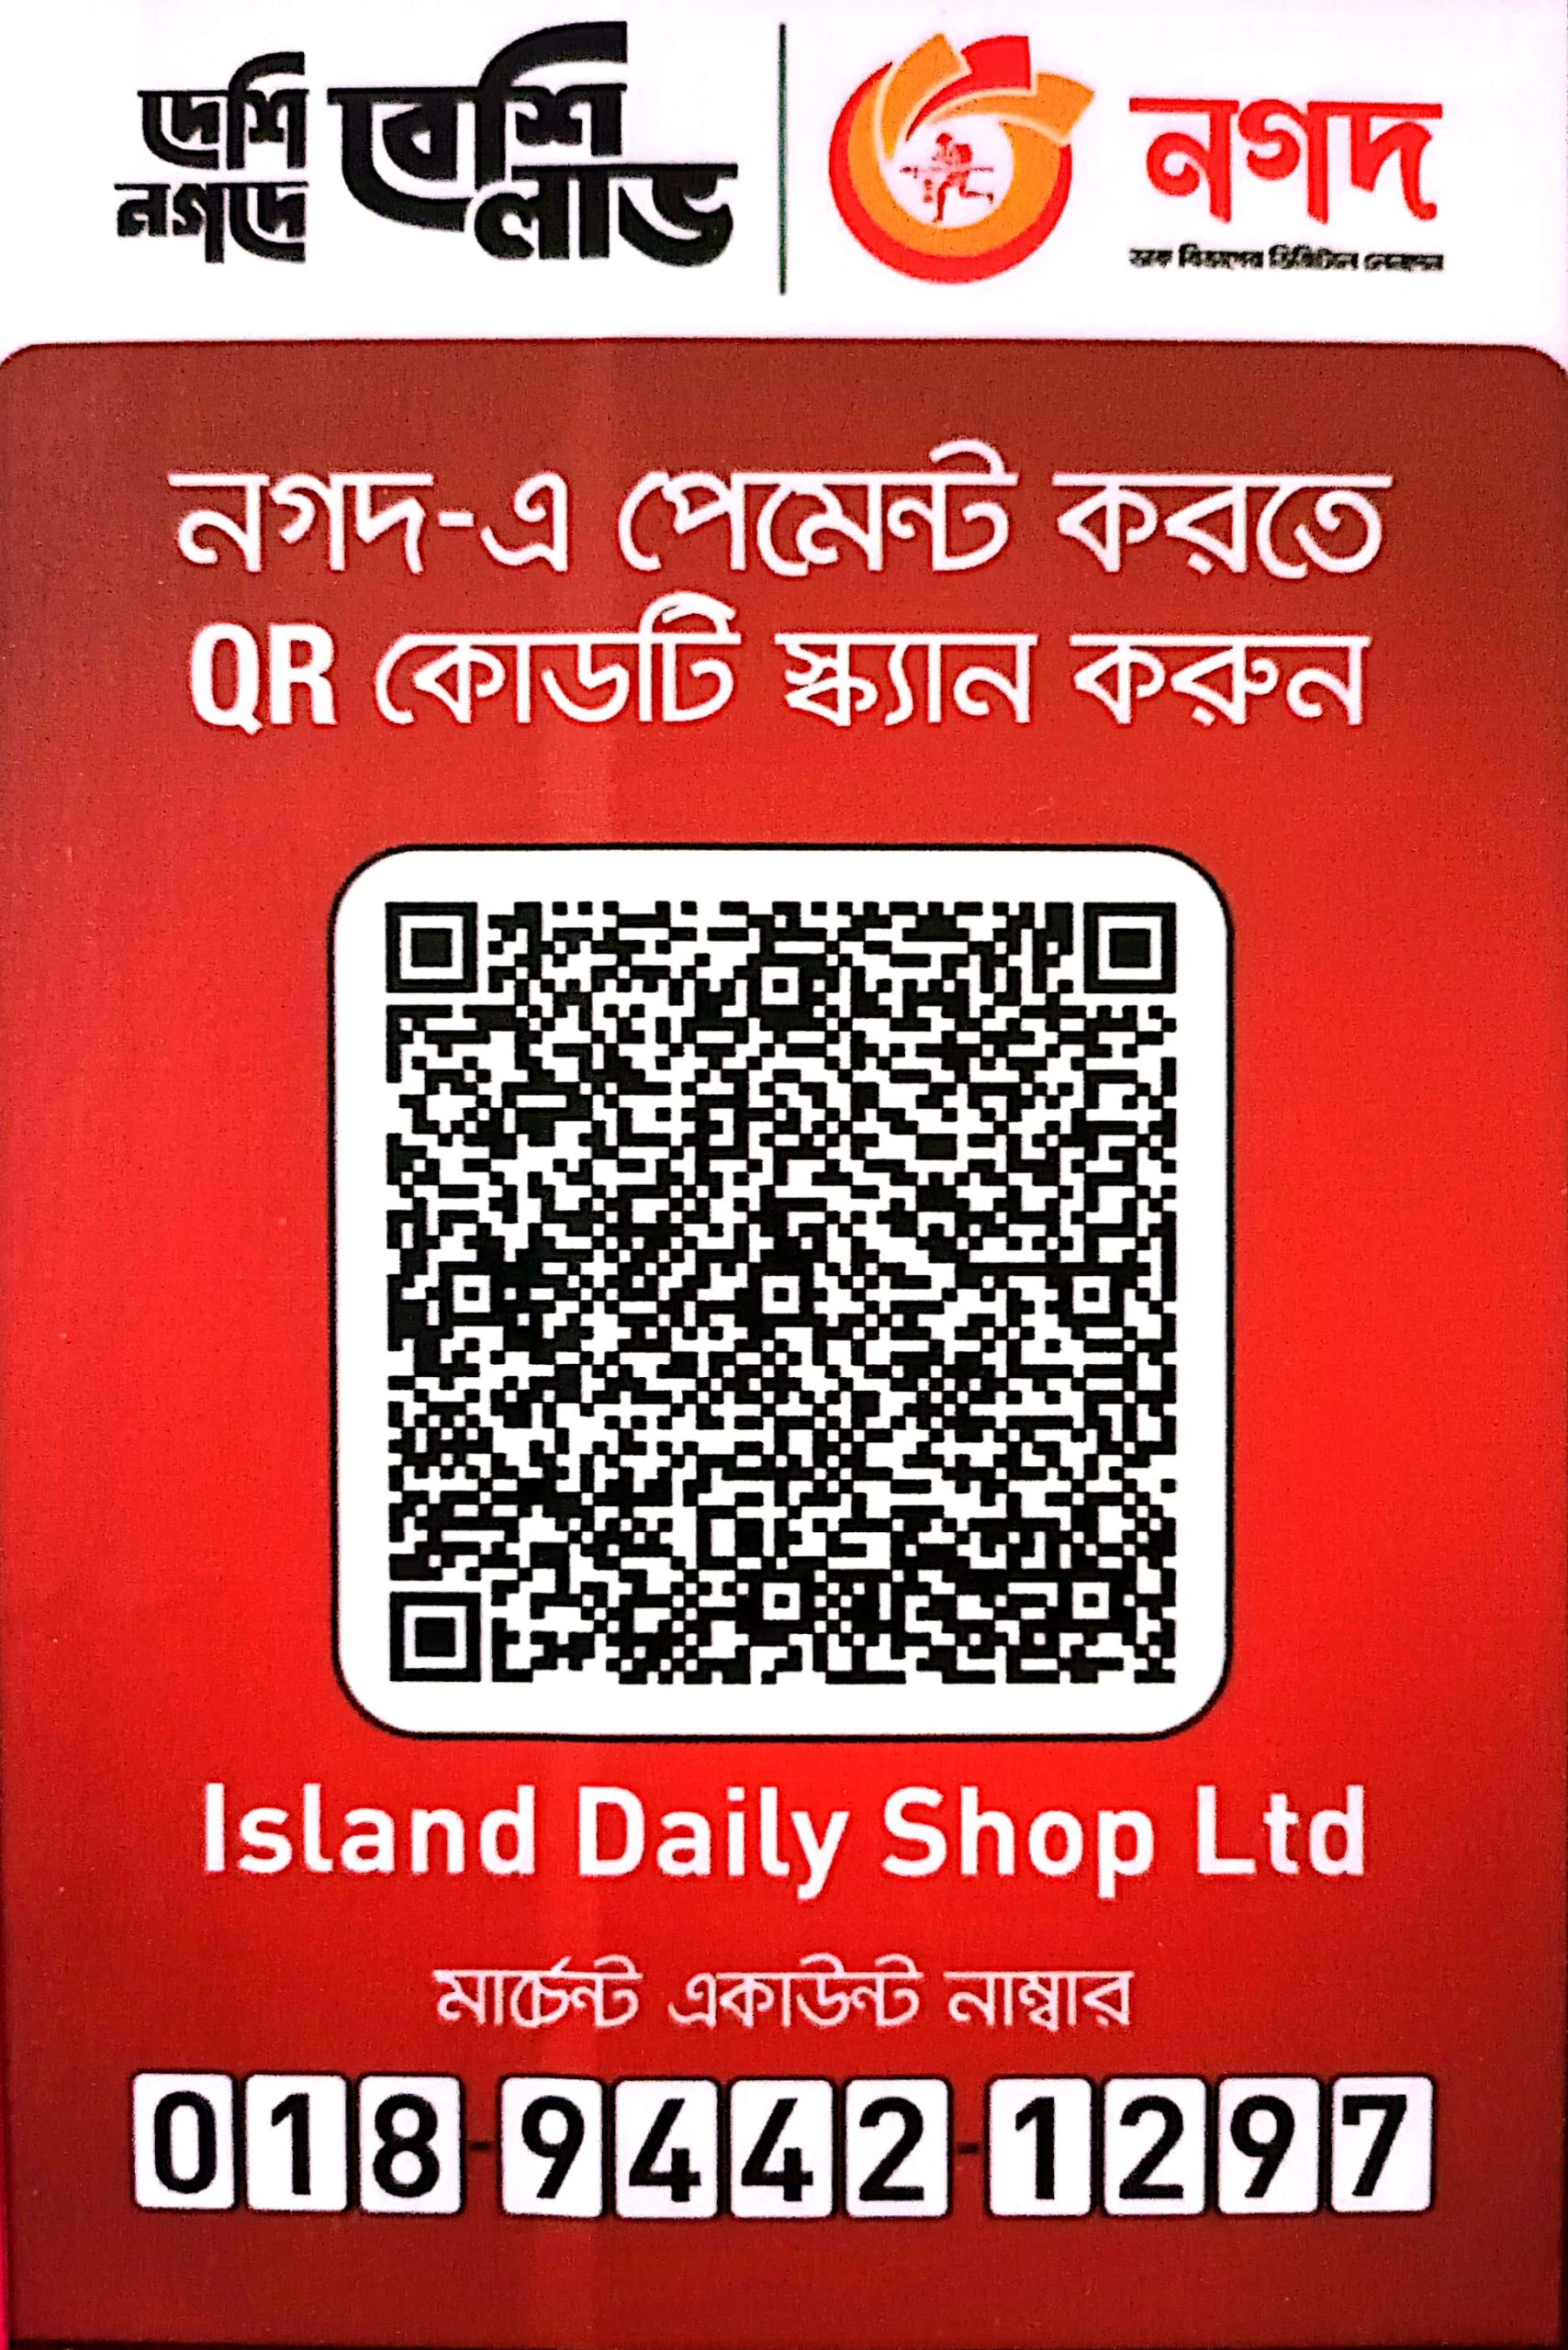 Nagad Marchant Of Island Daily Shop